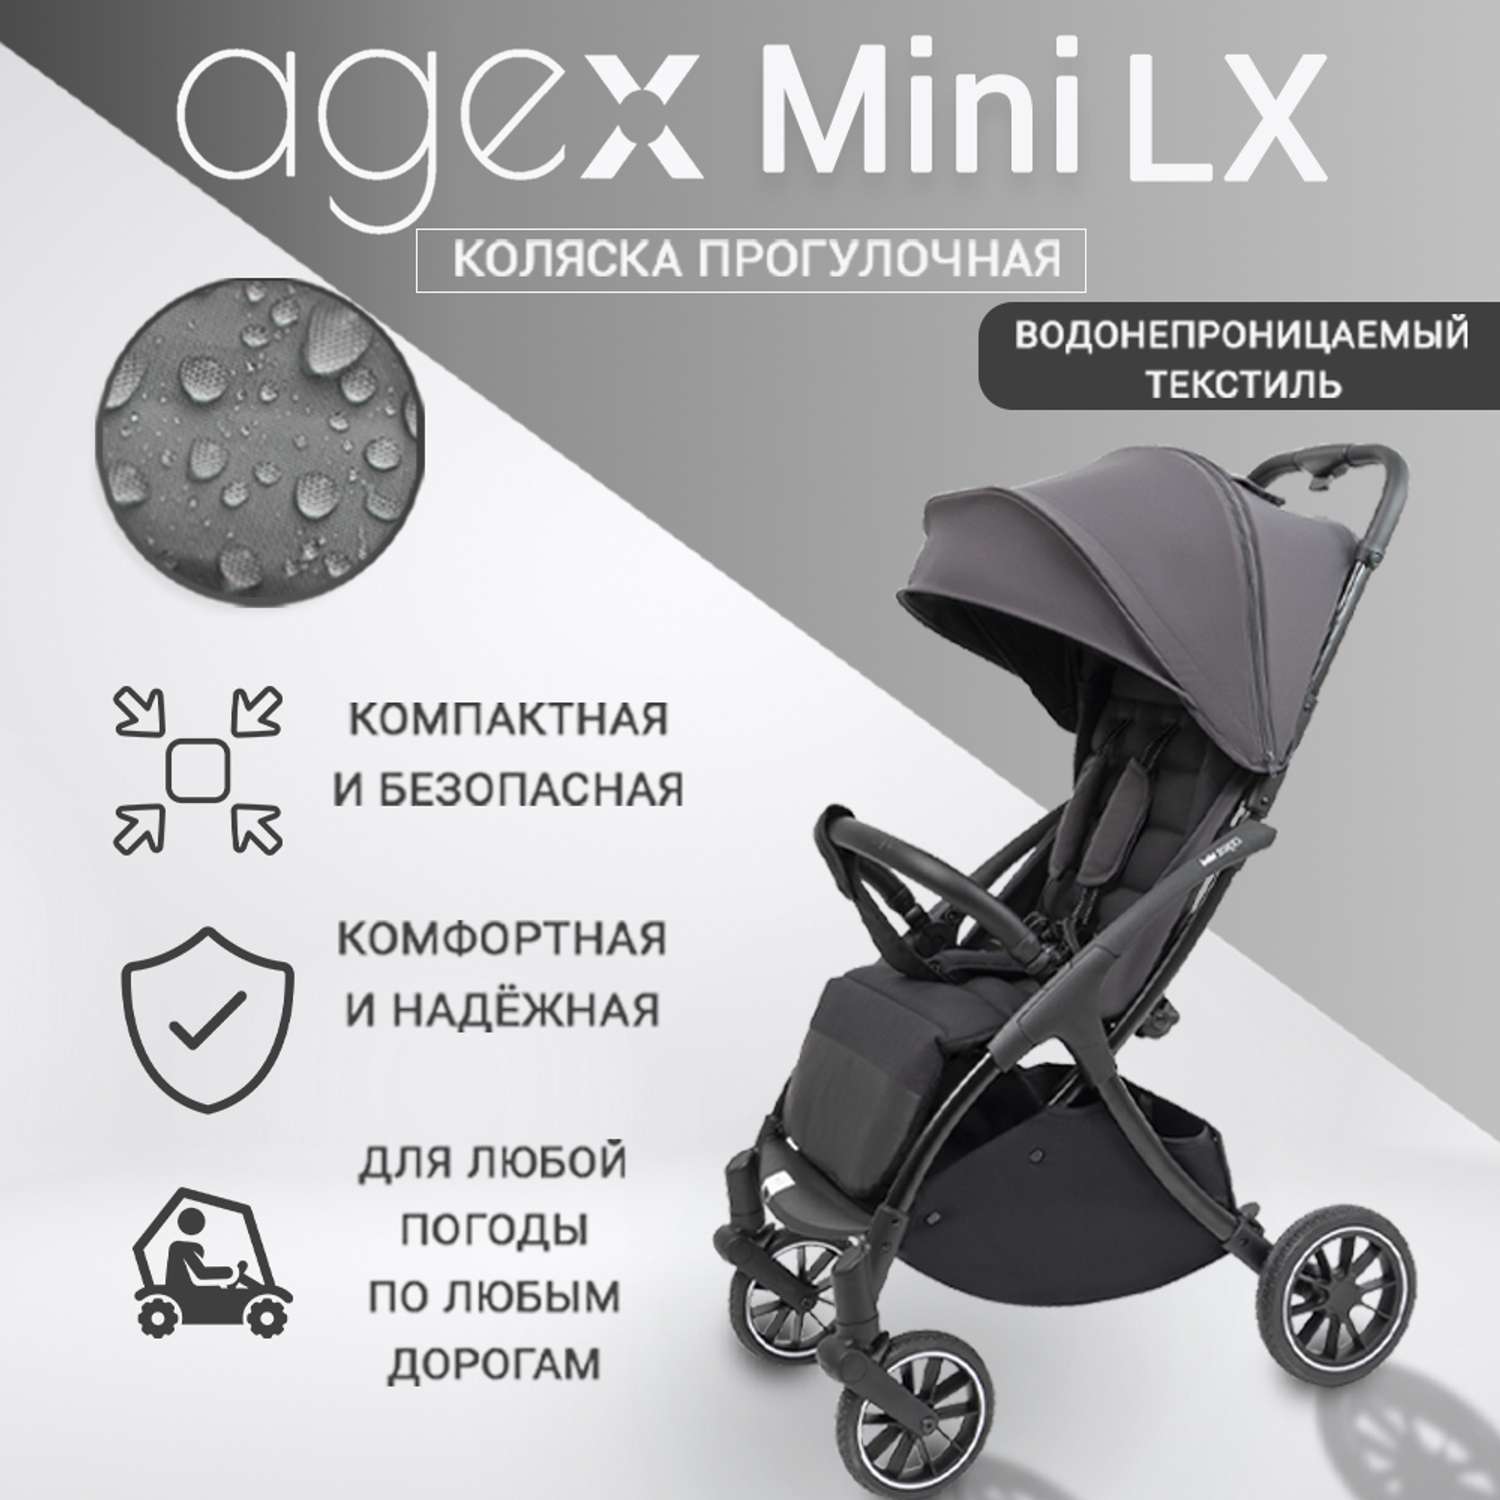 Коляска прогулочная agex Agex Mini LX Grey - фото 1